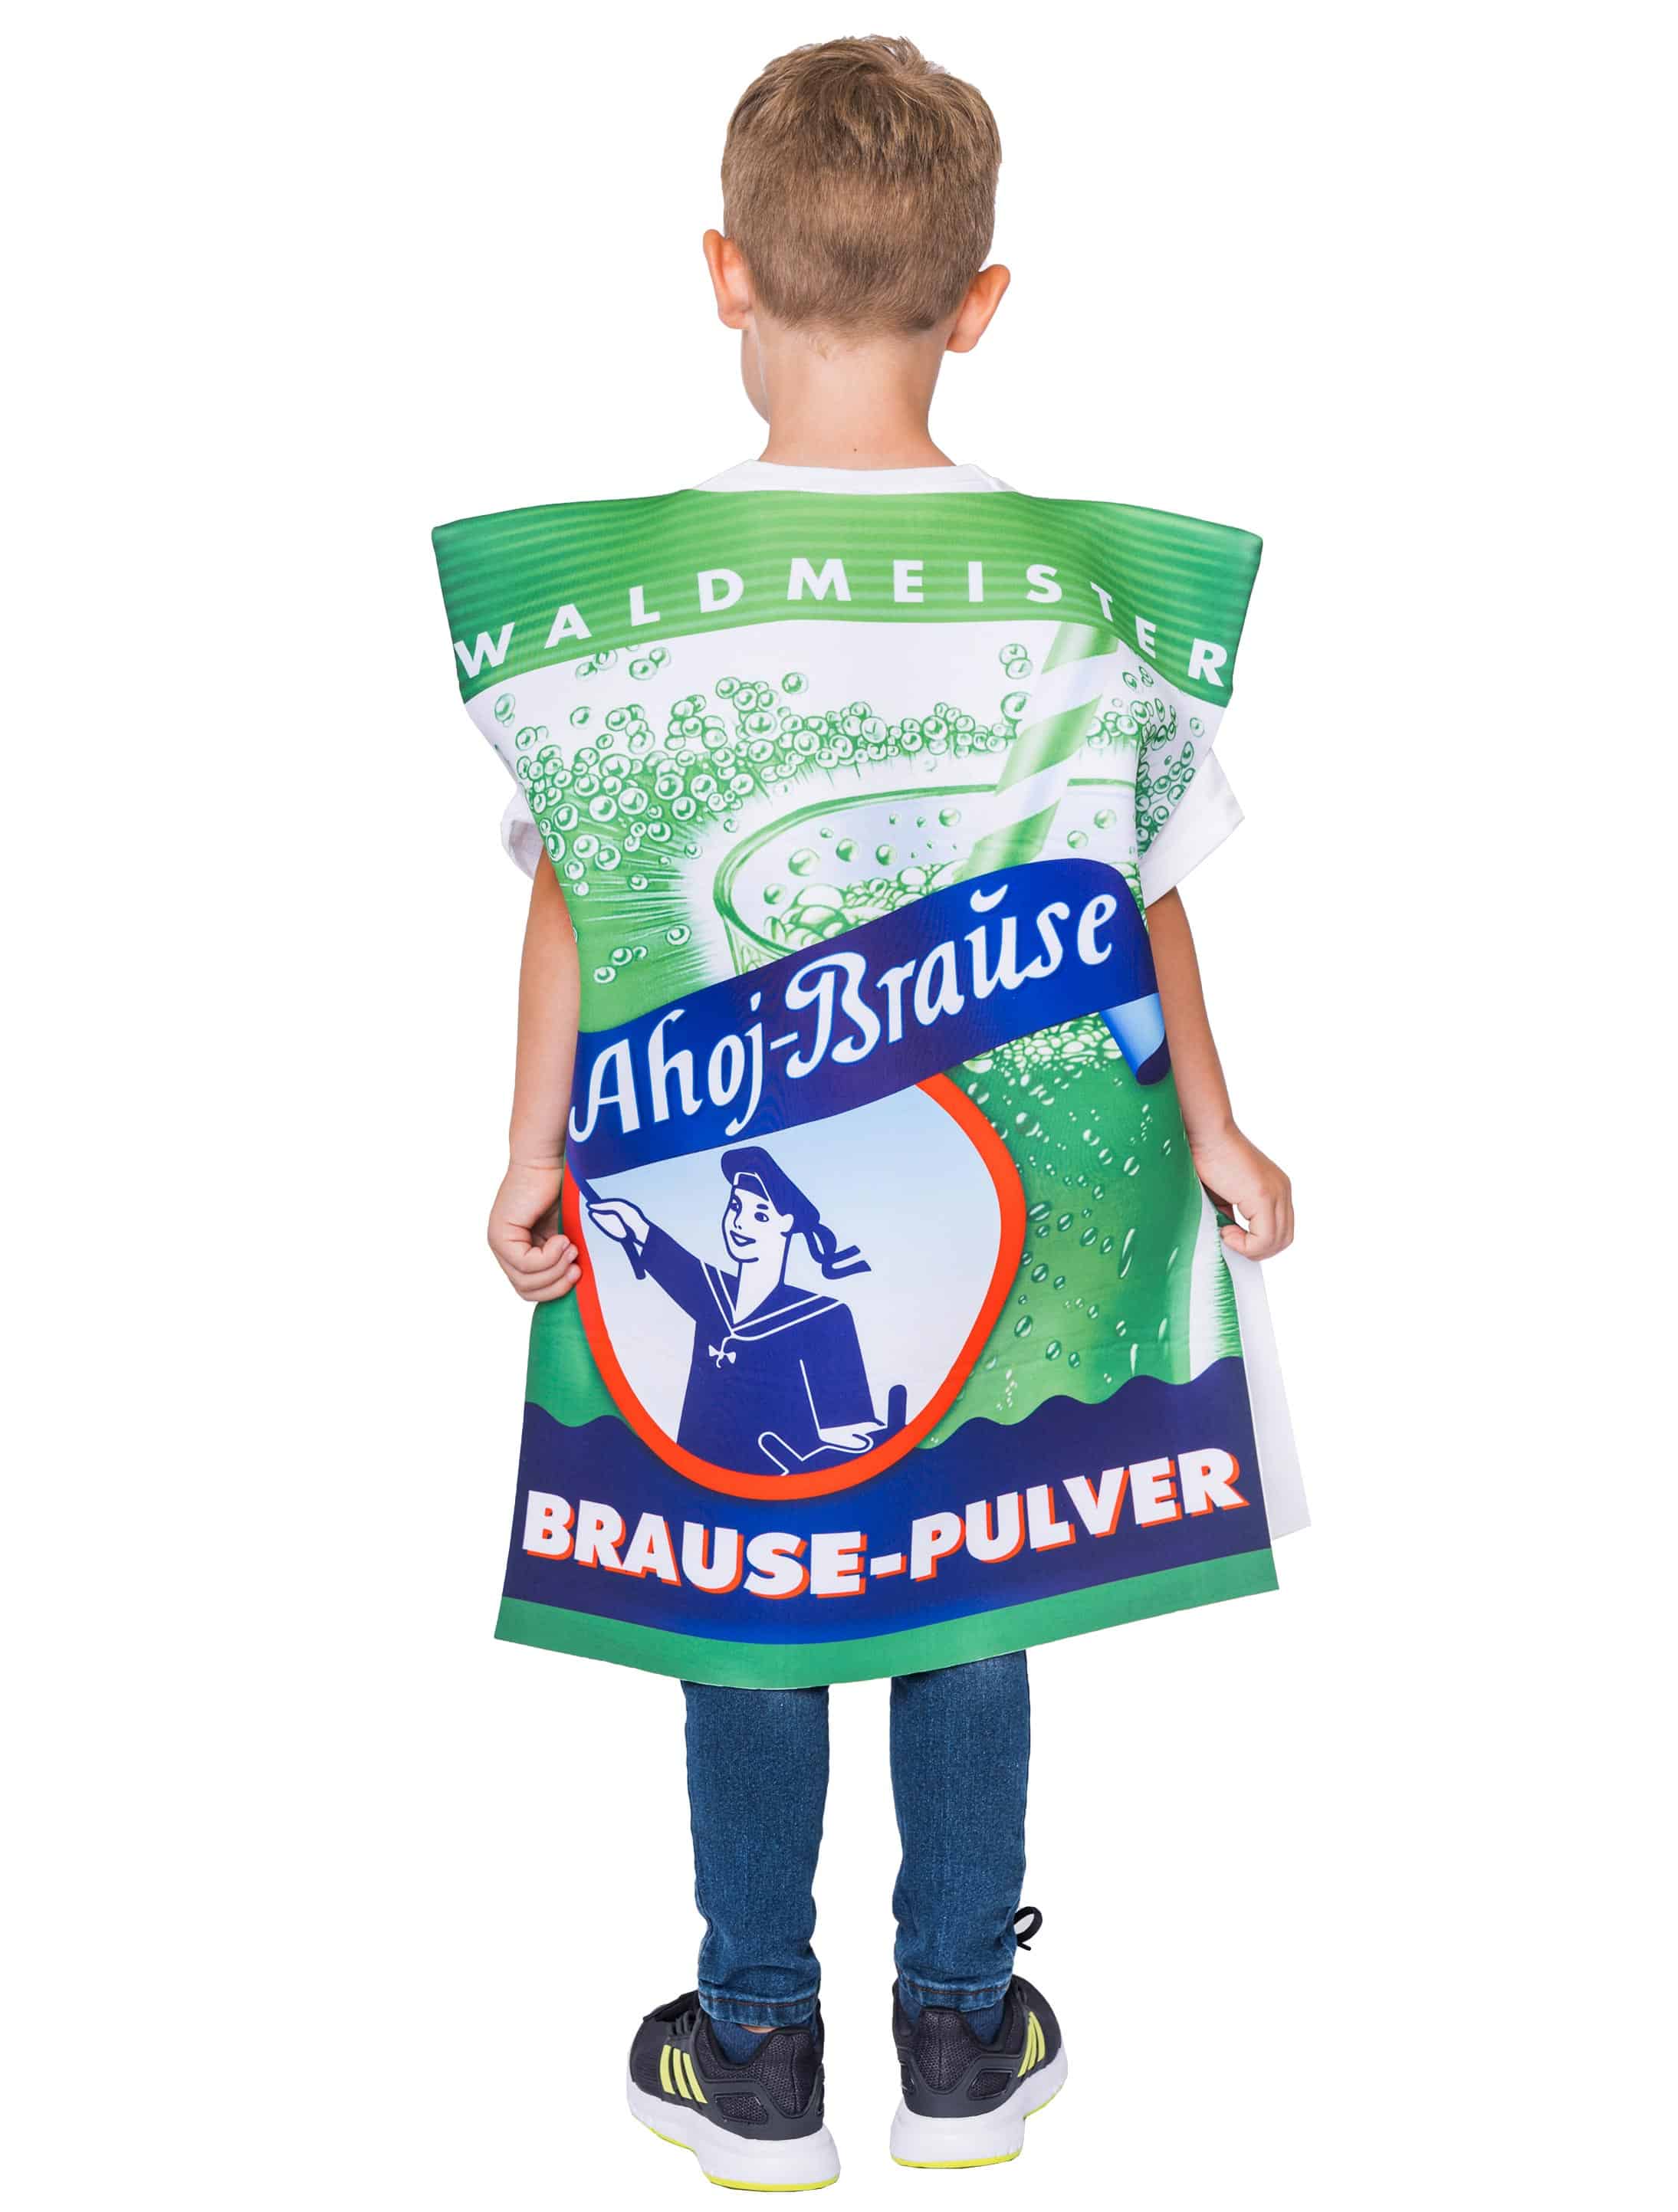 Kostüm Ahoj-Brause Waldmeister Kinder one size